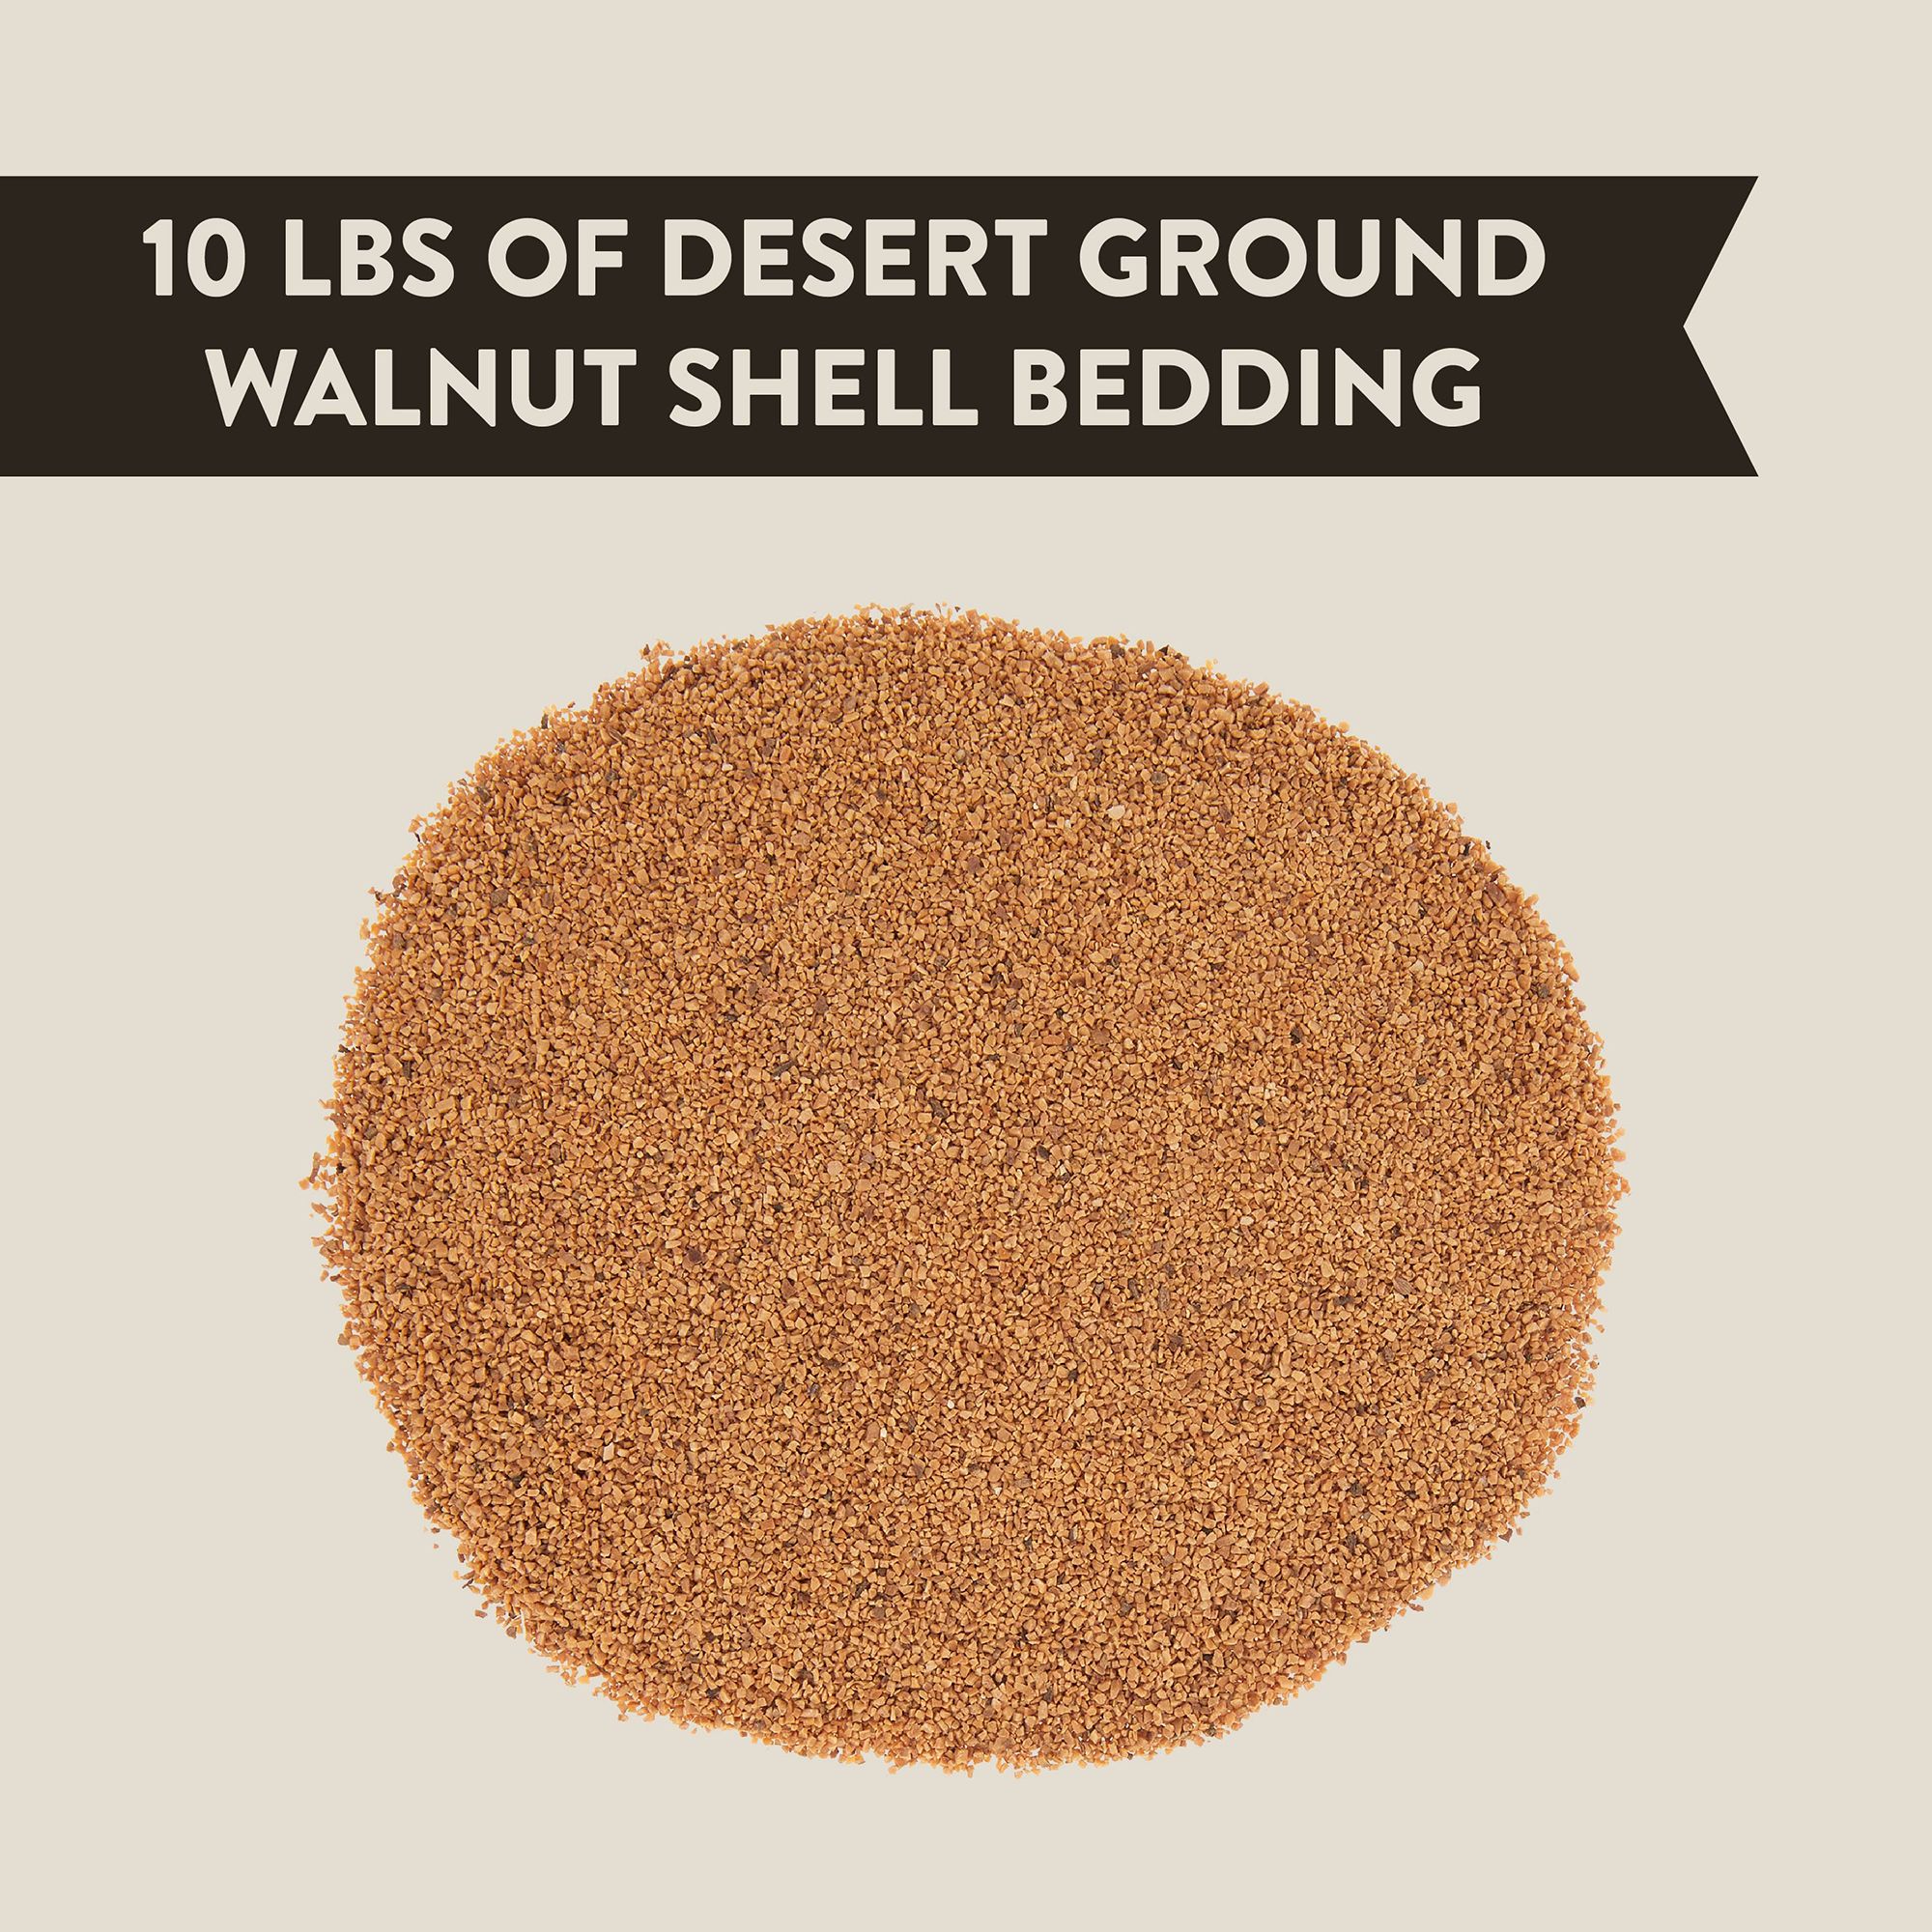 walnut shell bedding